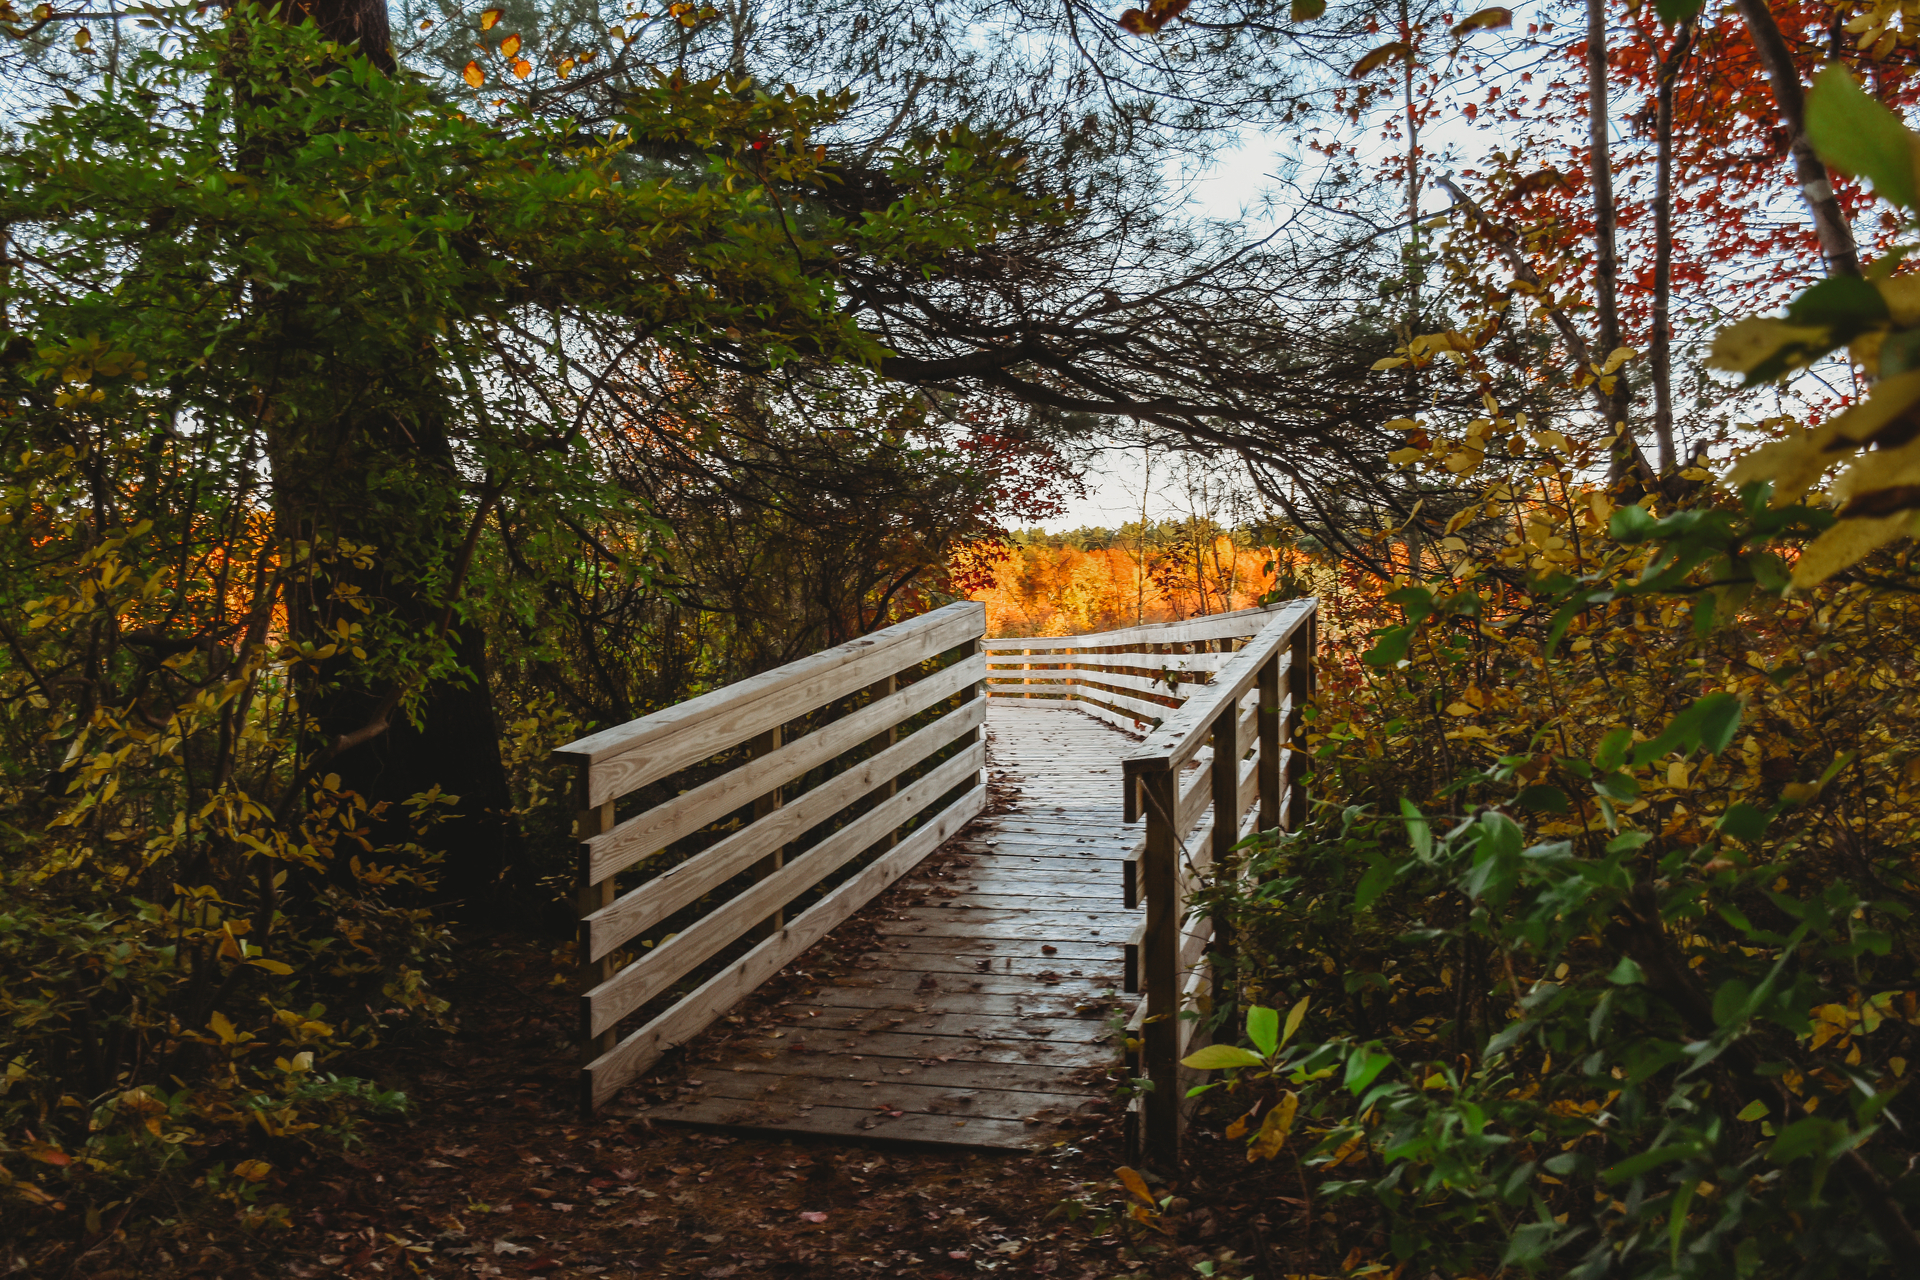 Start of boardwalk trail among fall leaves at Stony Brook